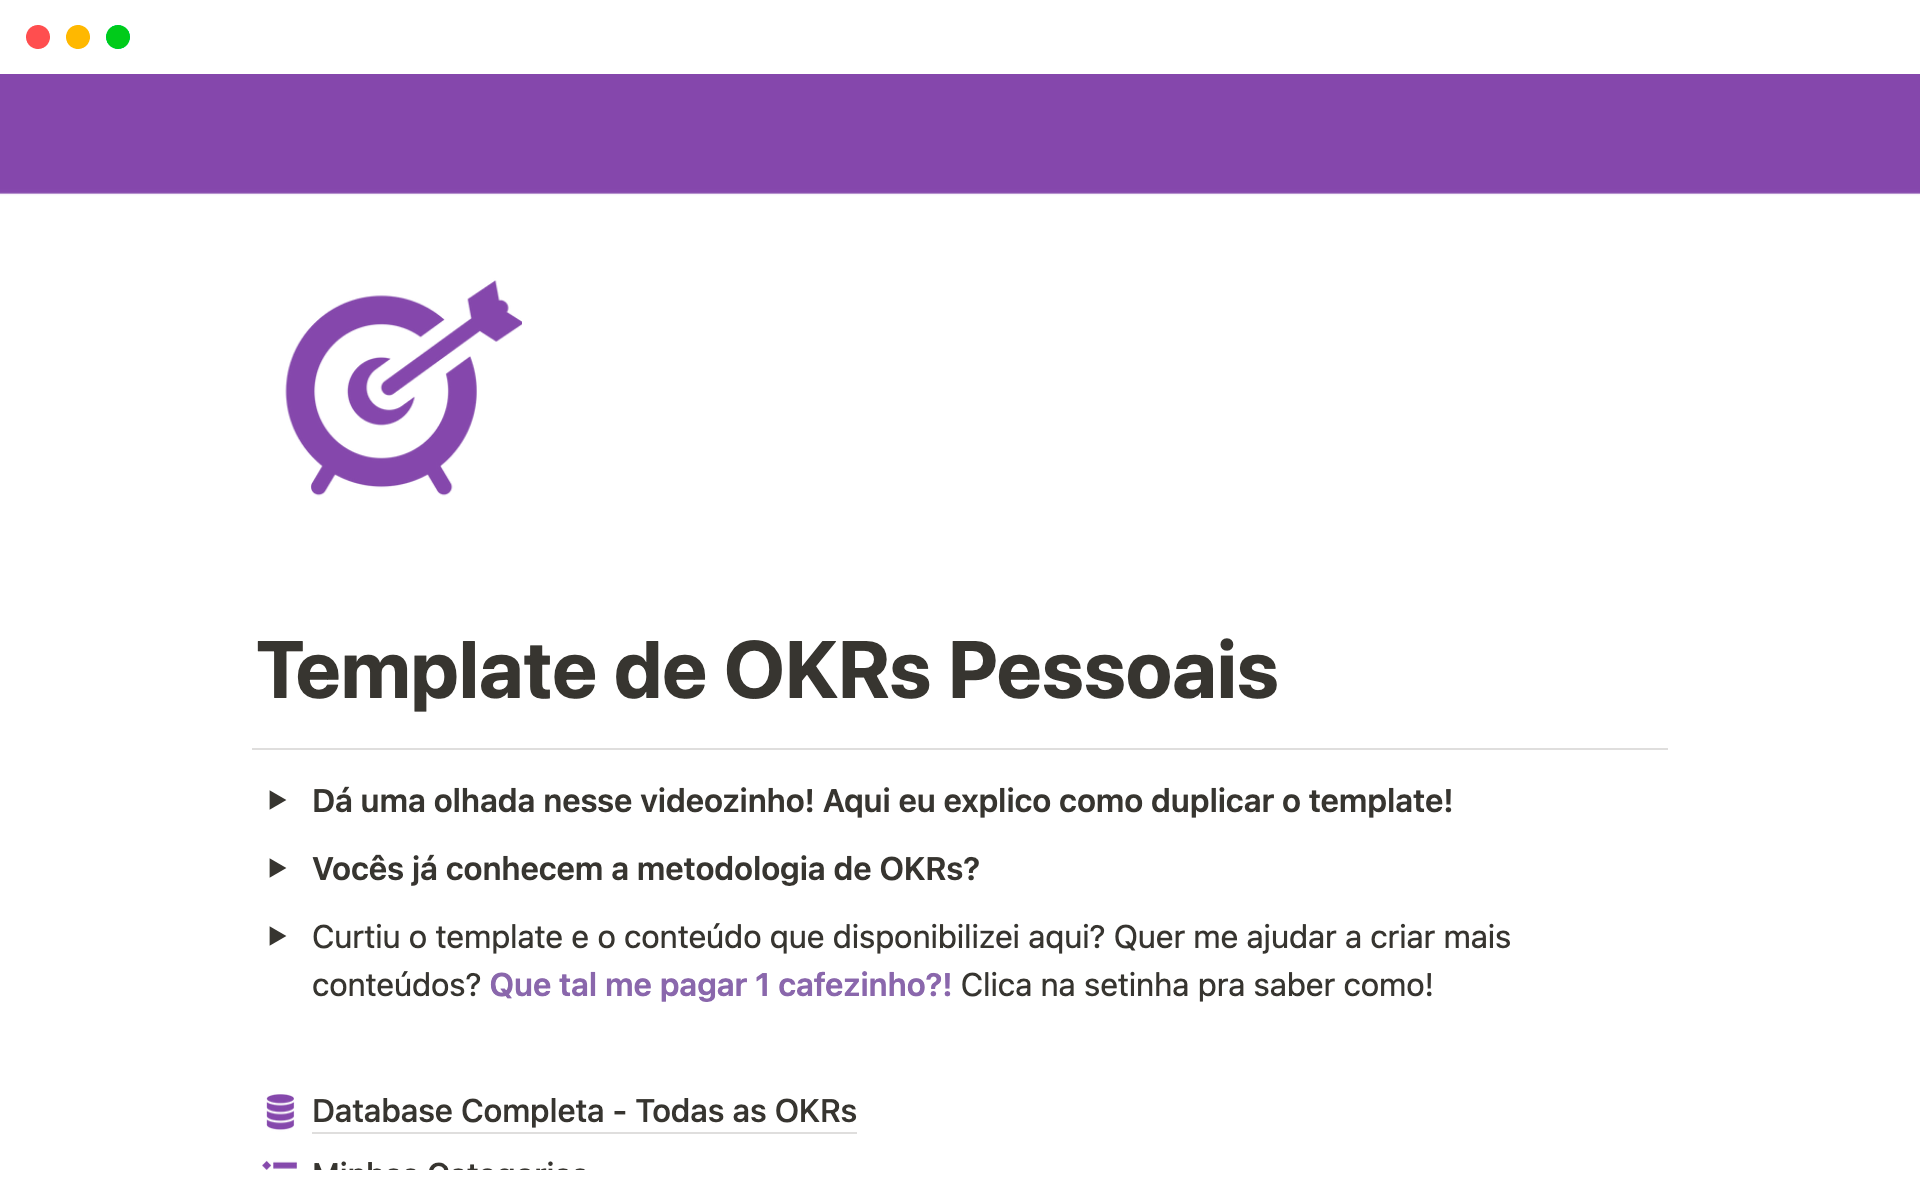 A template preview for OKRs Pessoais